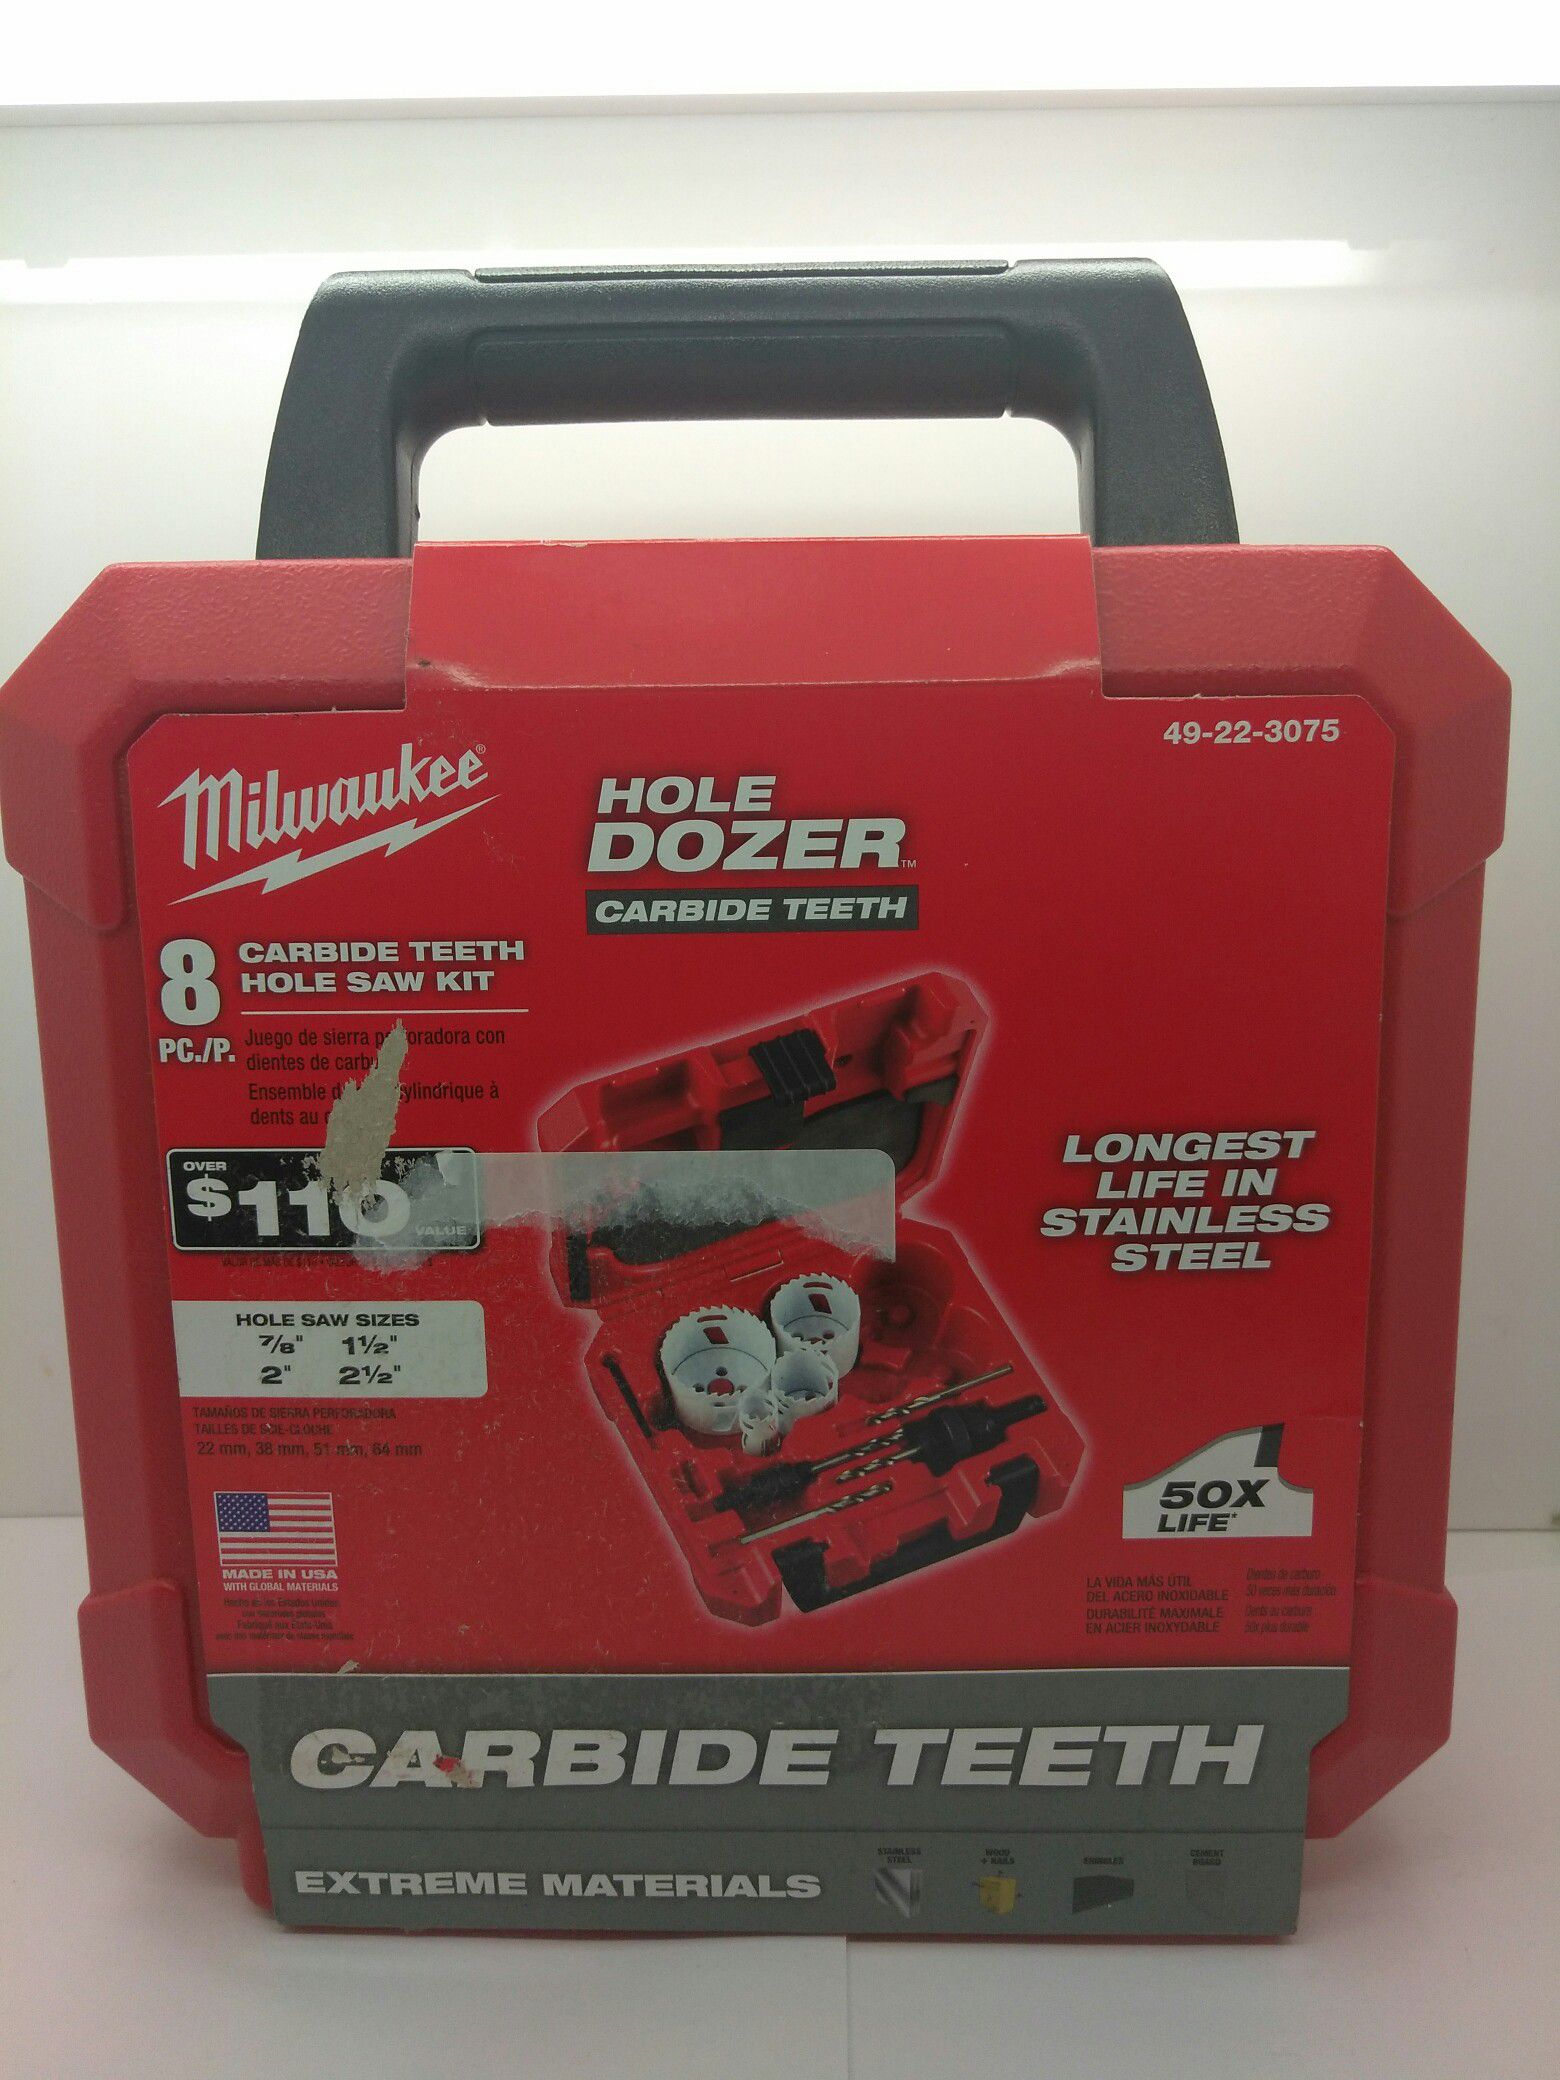 Milwaukee hole dozer carbide teeth 8-piece hole saw kit 49-22-3075